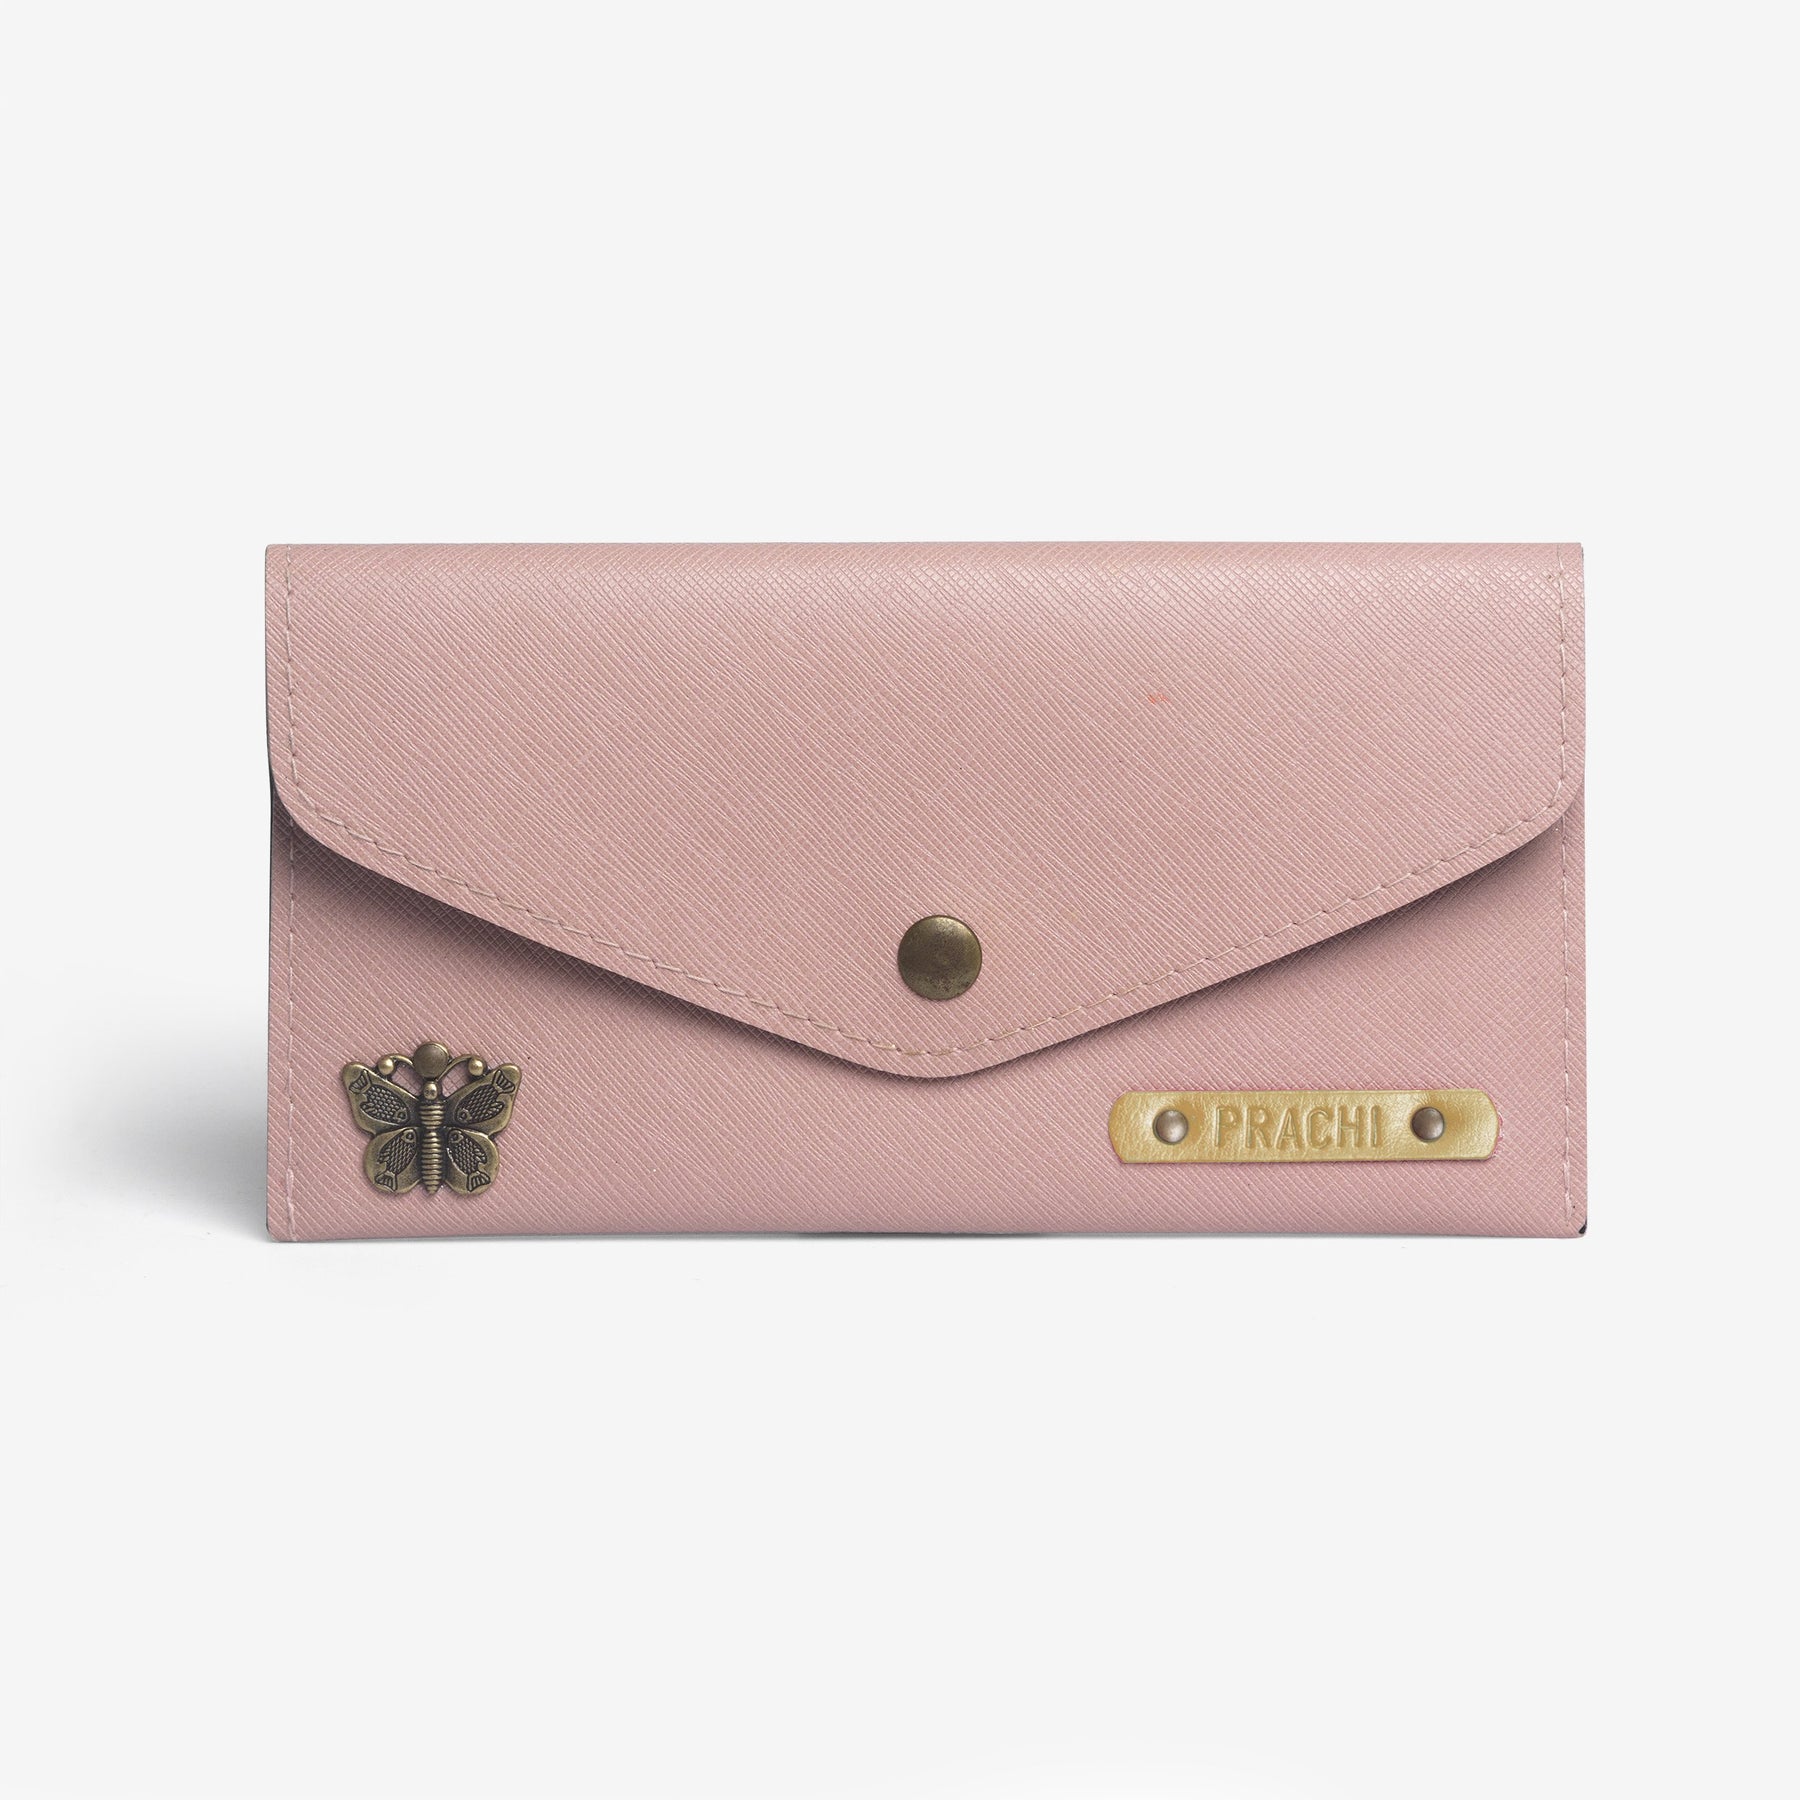 Personalized Women's Wallet - Salmon Pink